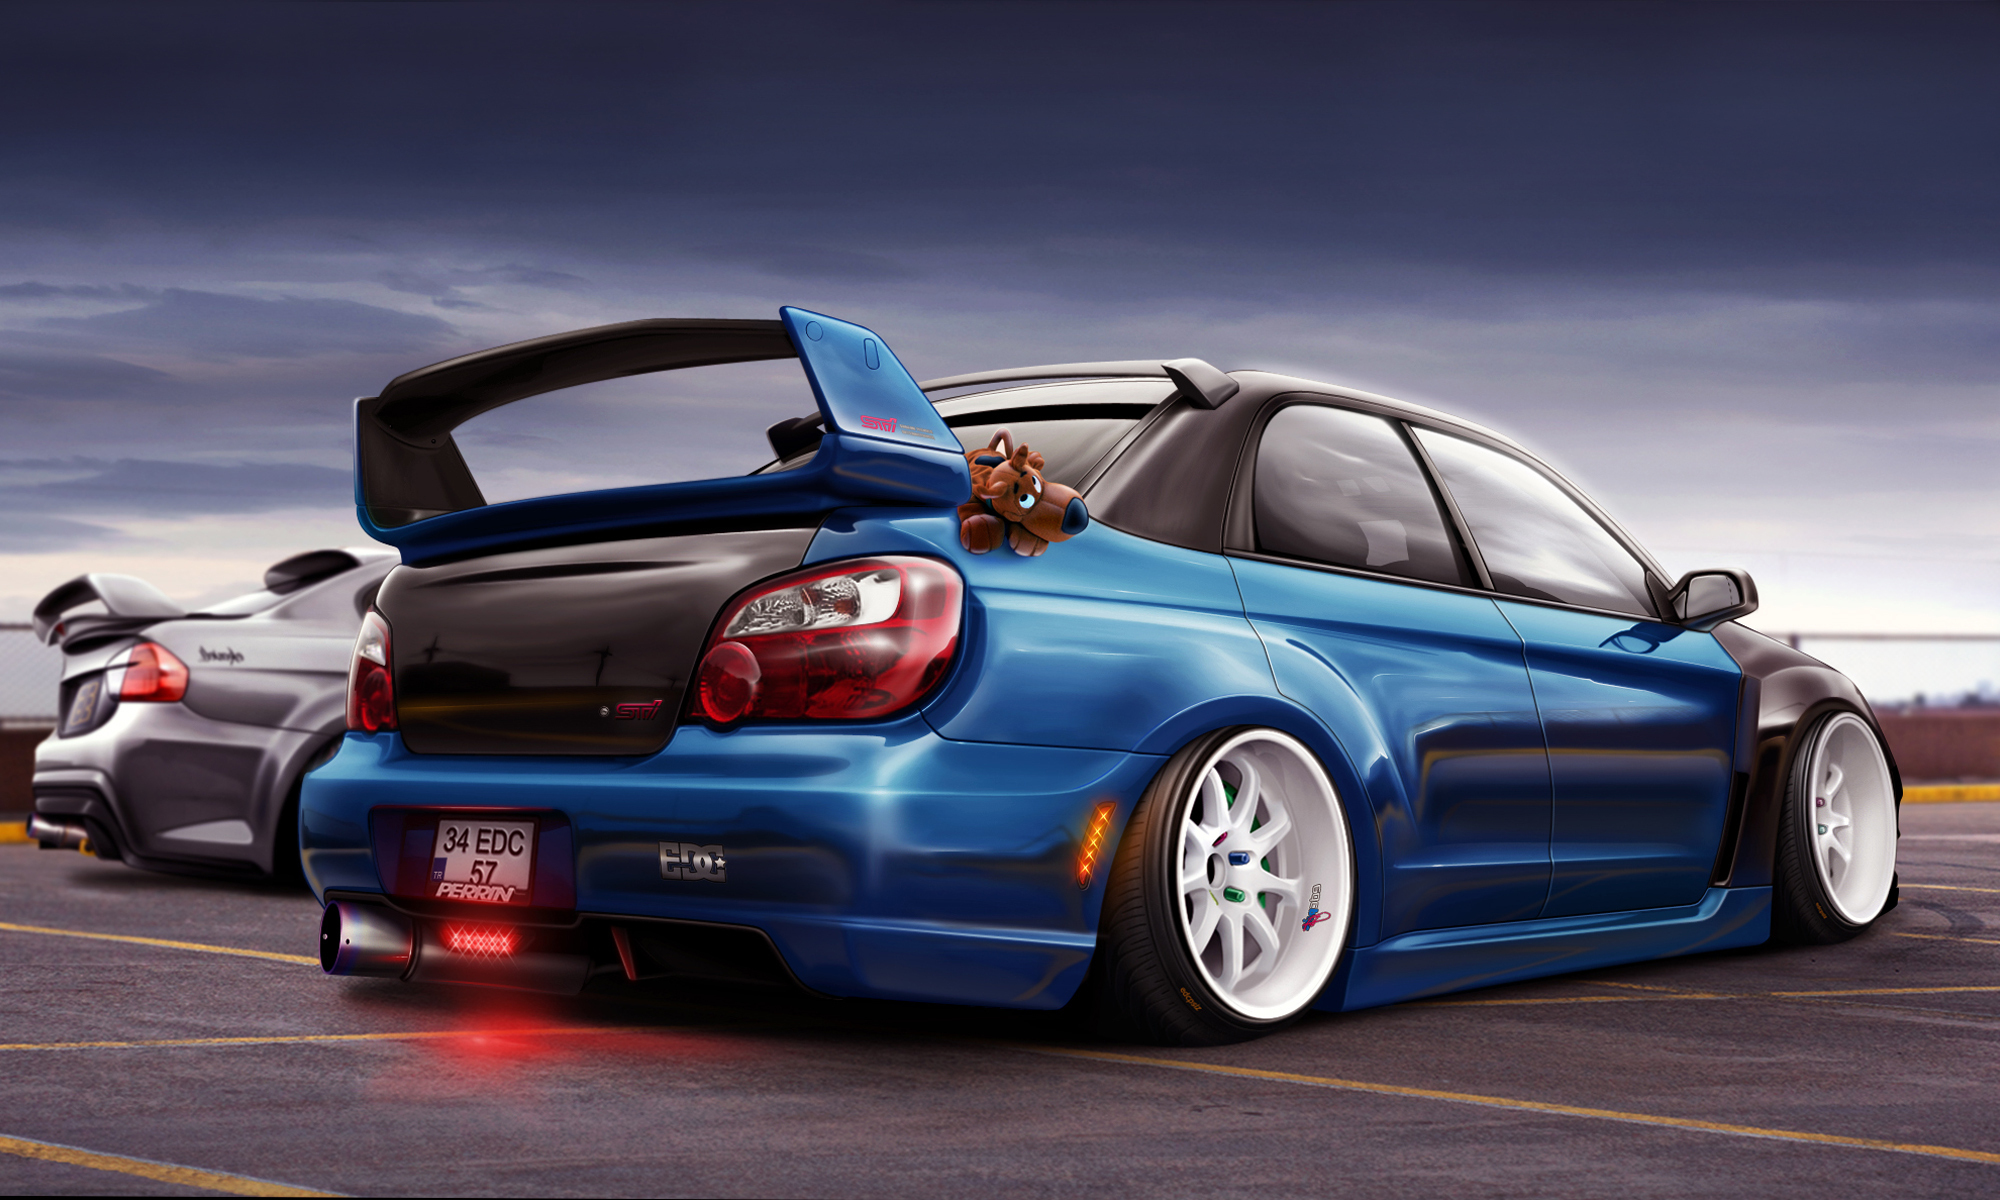 Desktop Wallpaper Of Subaru Impreza Wrx For